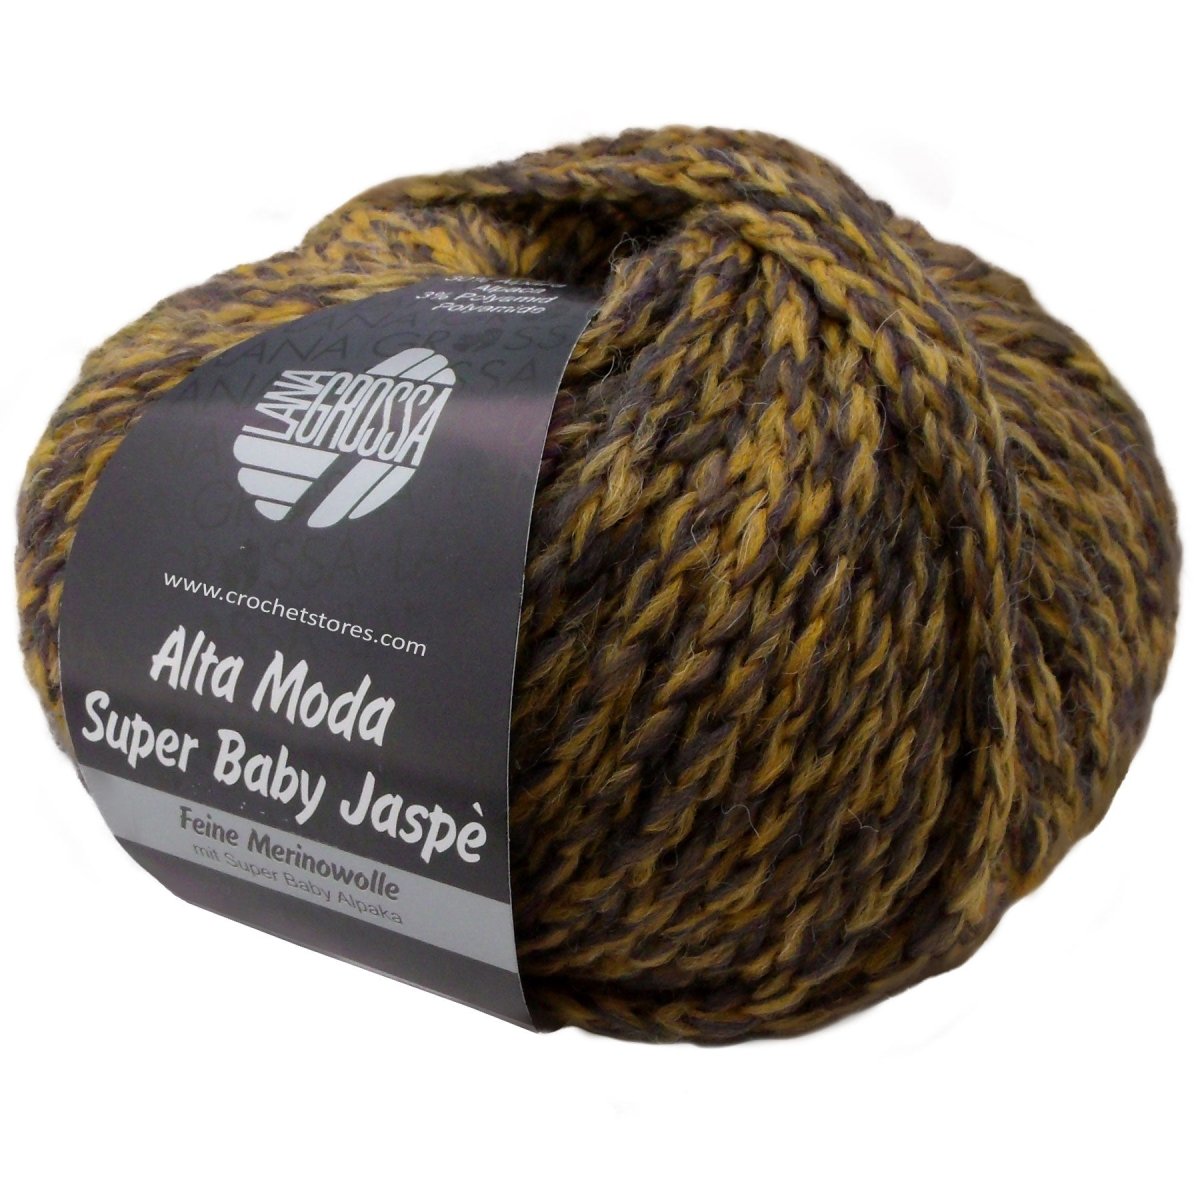 ALTA MODA SUPER BABY - Crochetstores779-01014033493163545